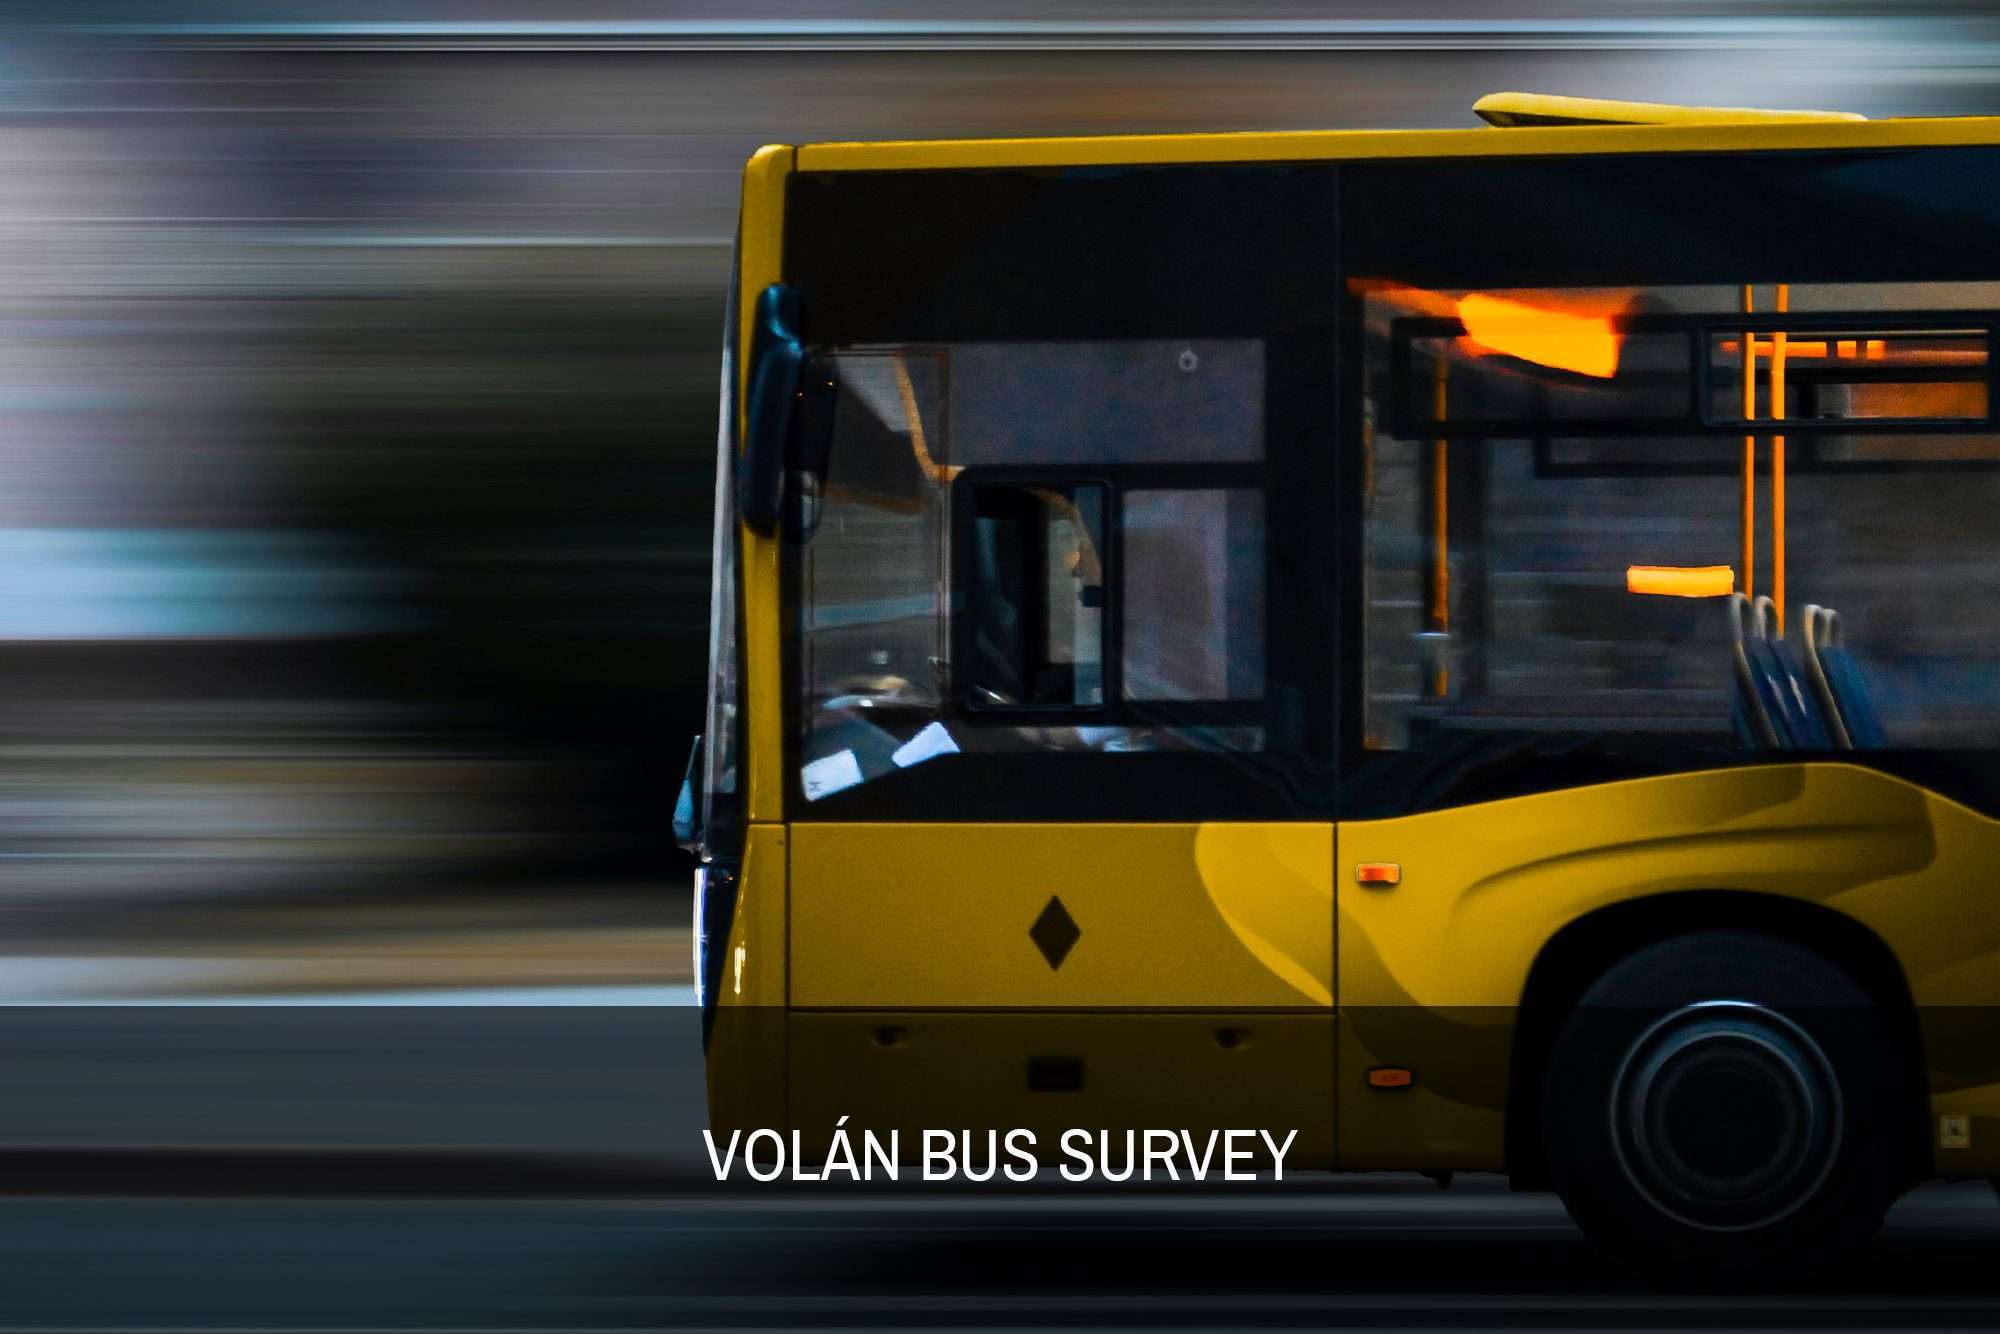 Volan-bus-survey-alap-referencia.jpg